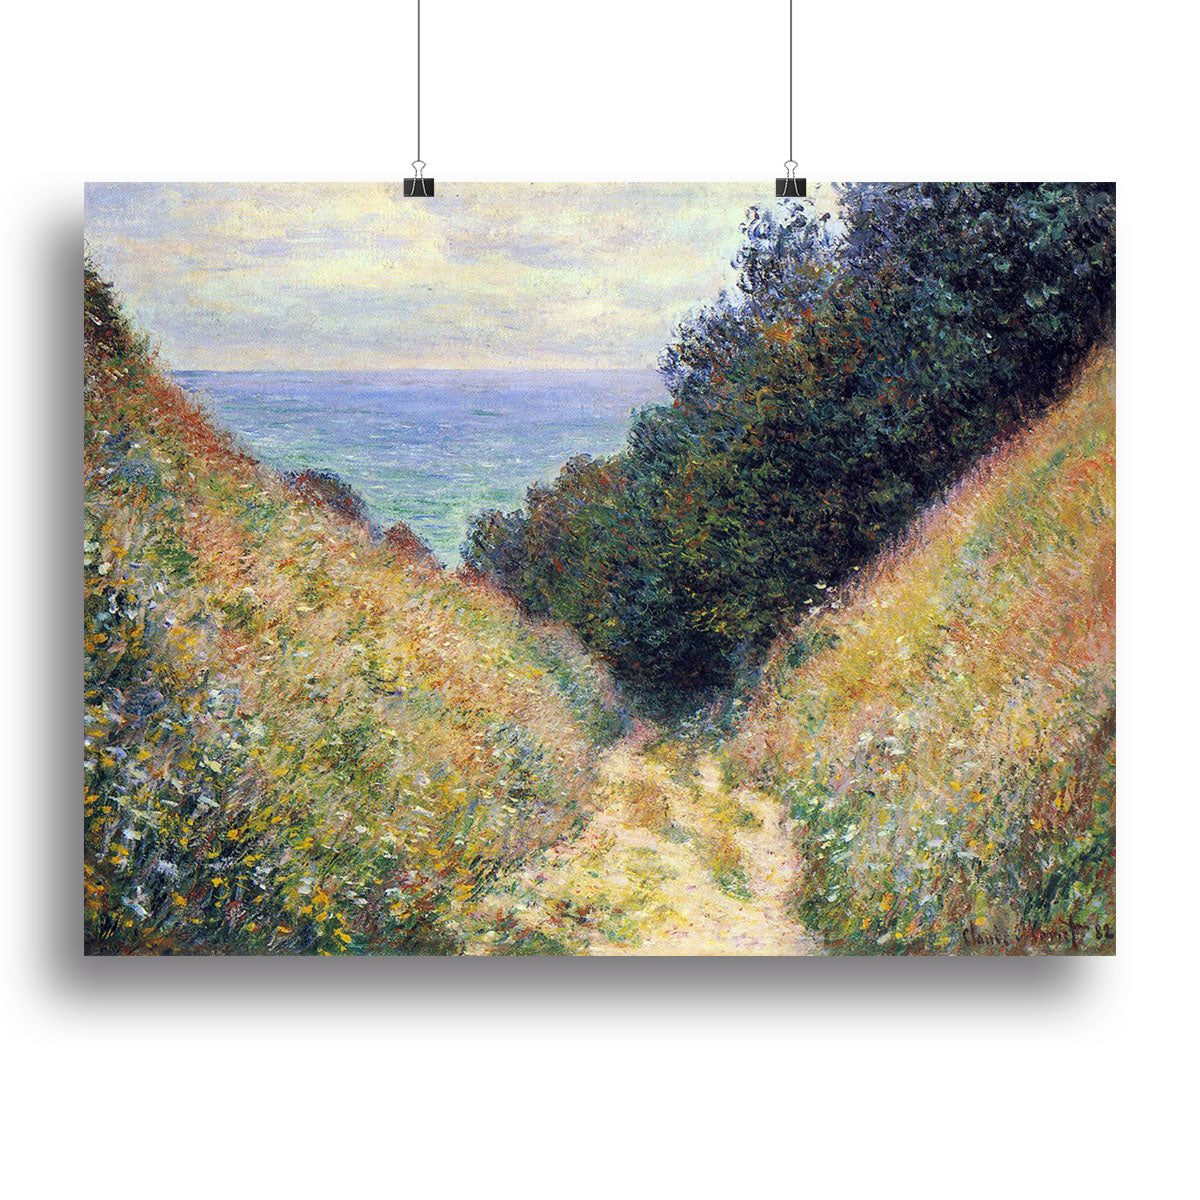 Pourville 1 by Monet Canvas Print or Poster - Canvas Art Rocks - 2